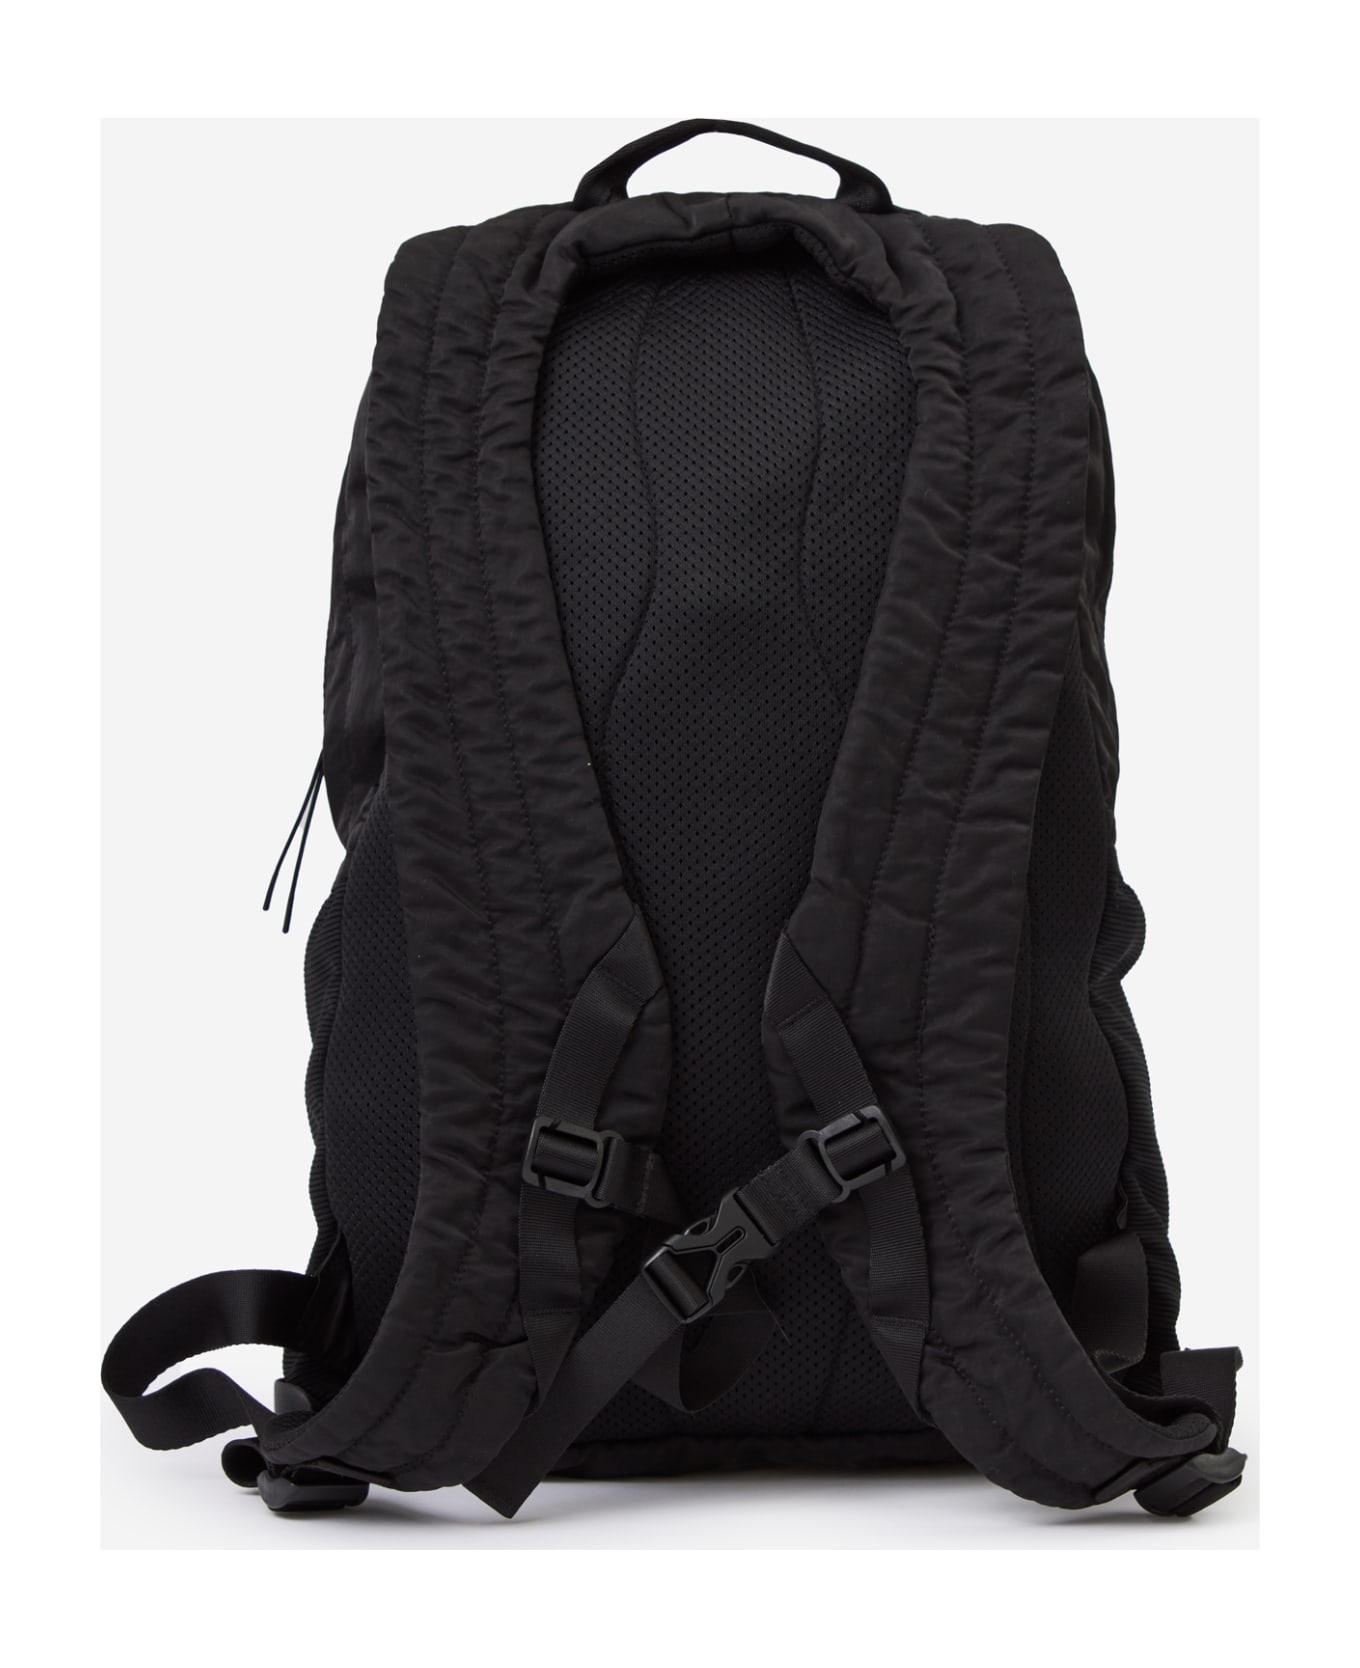 C.P. Company Backpack - black